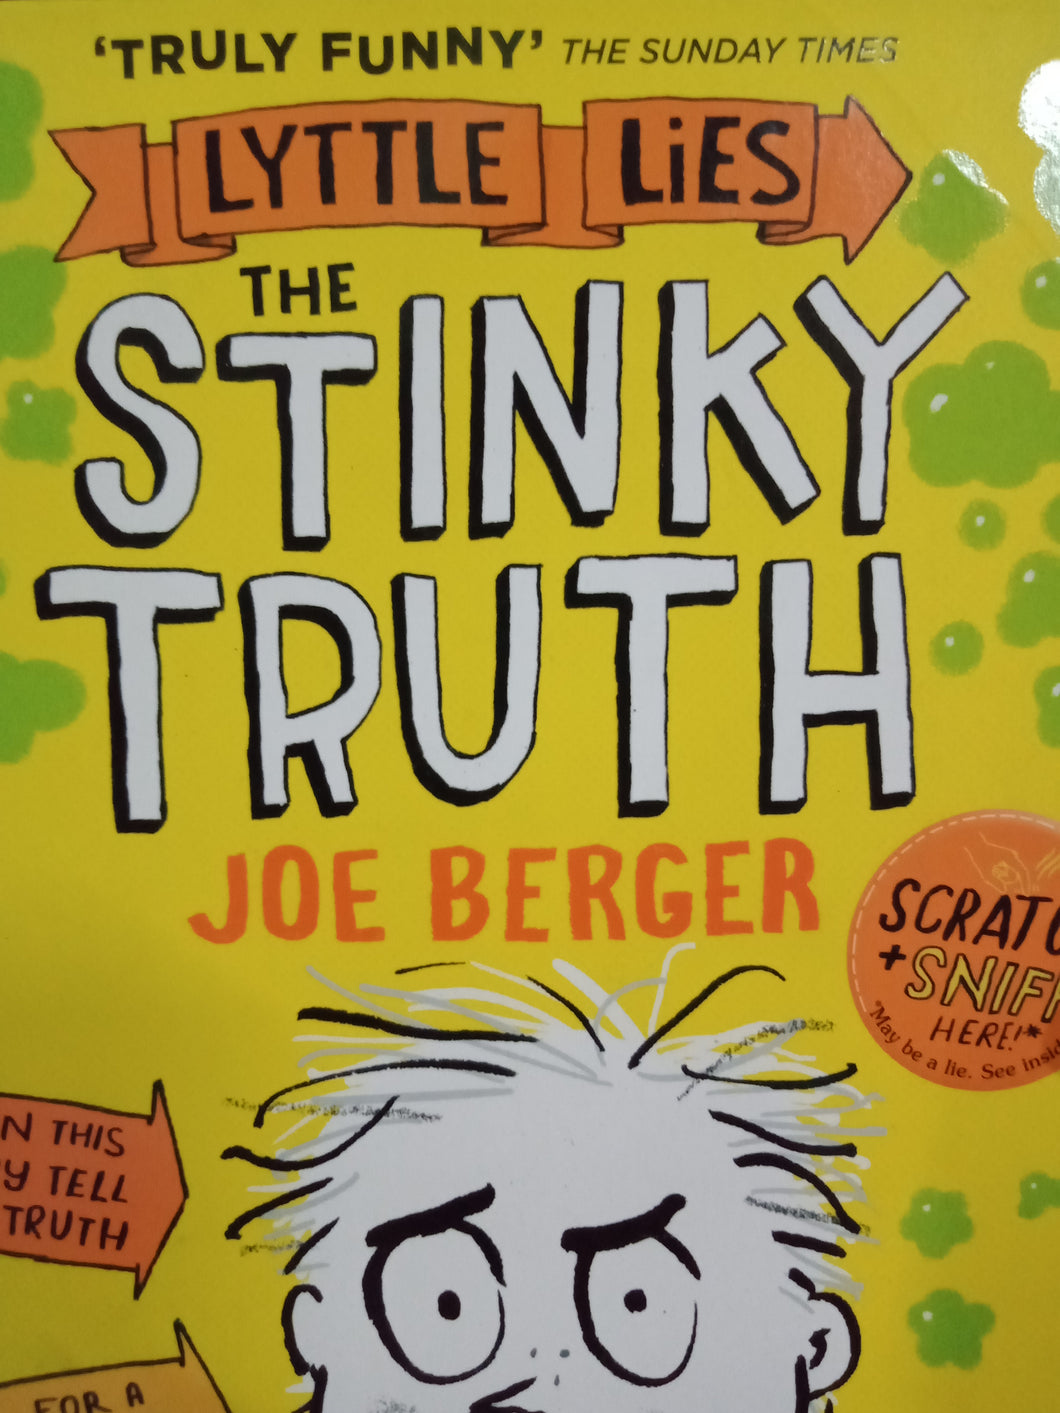 Lyttle Lies The Stinky Truth by Joe Berger